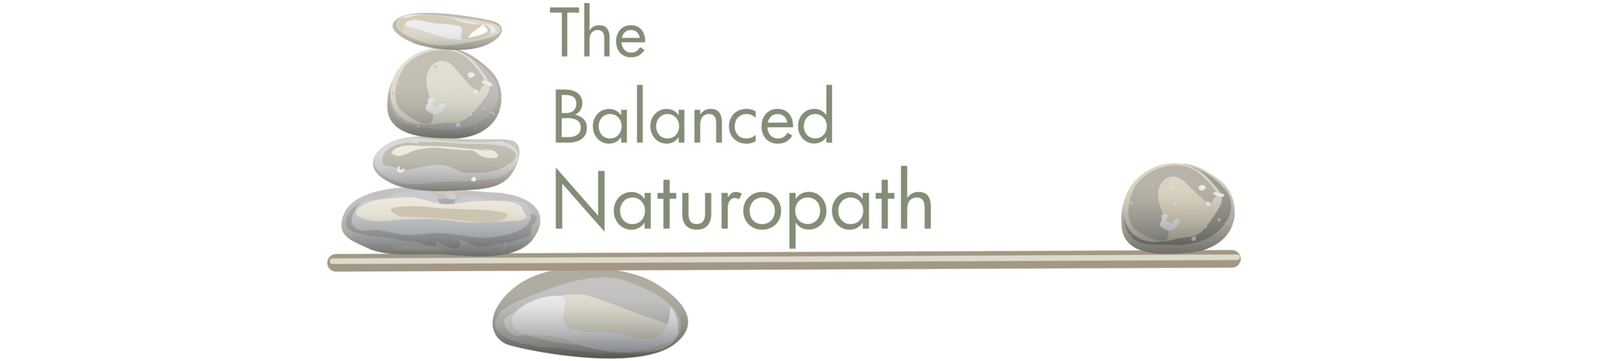 The Balanced Naturopath